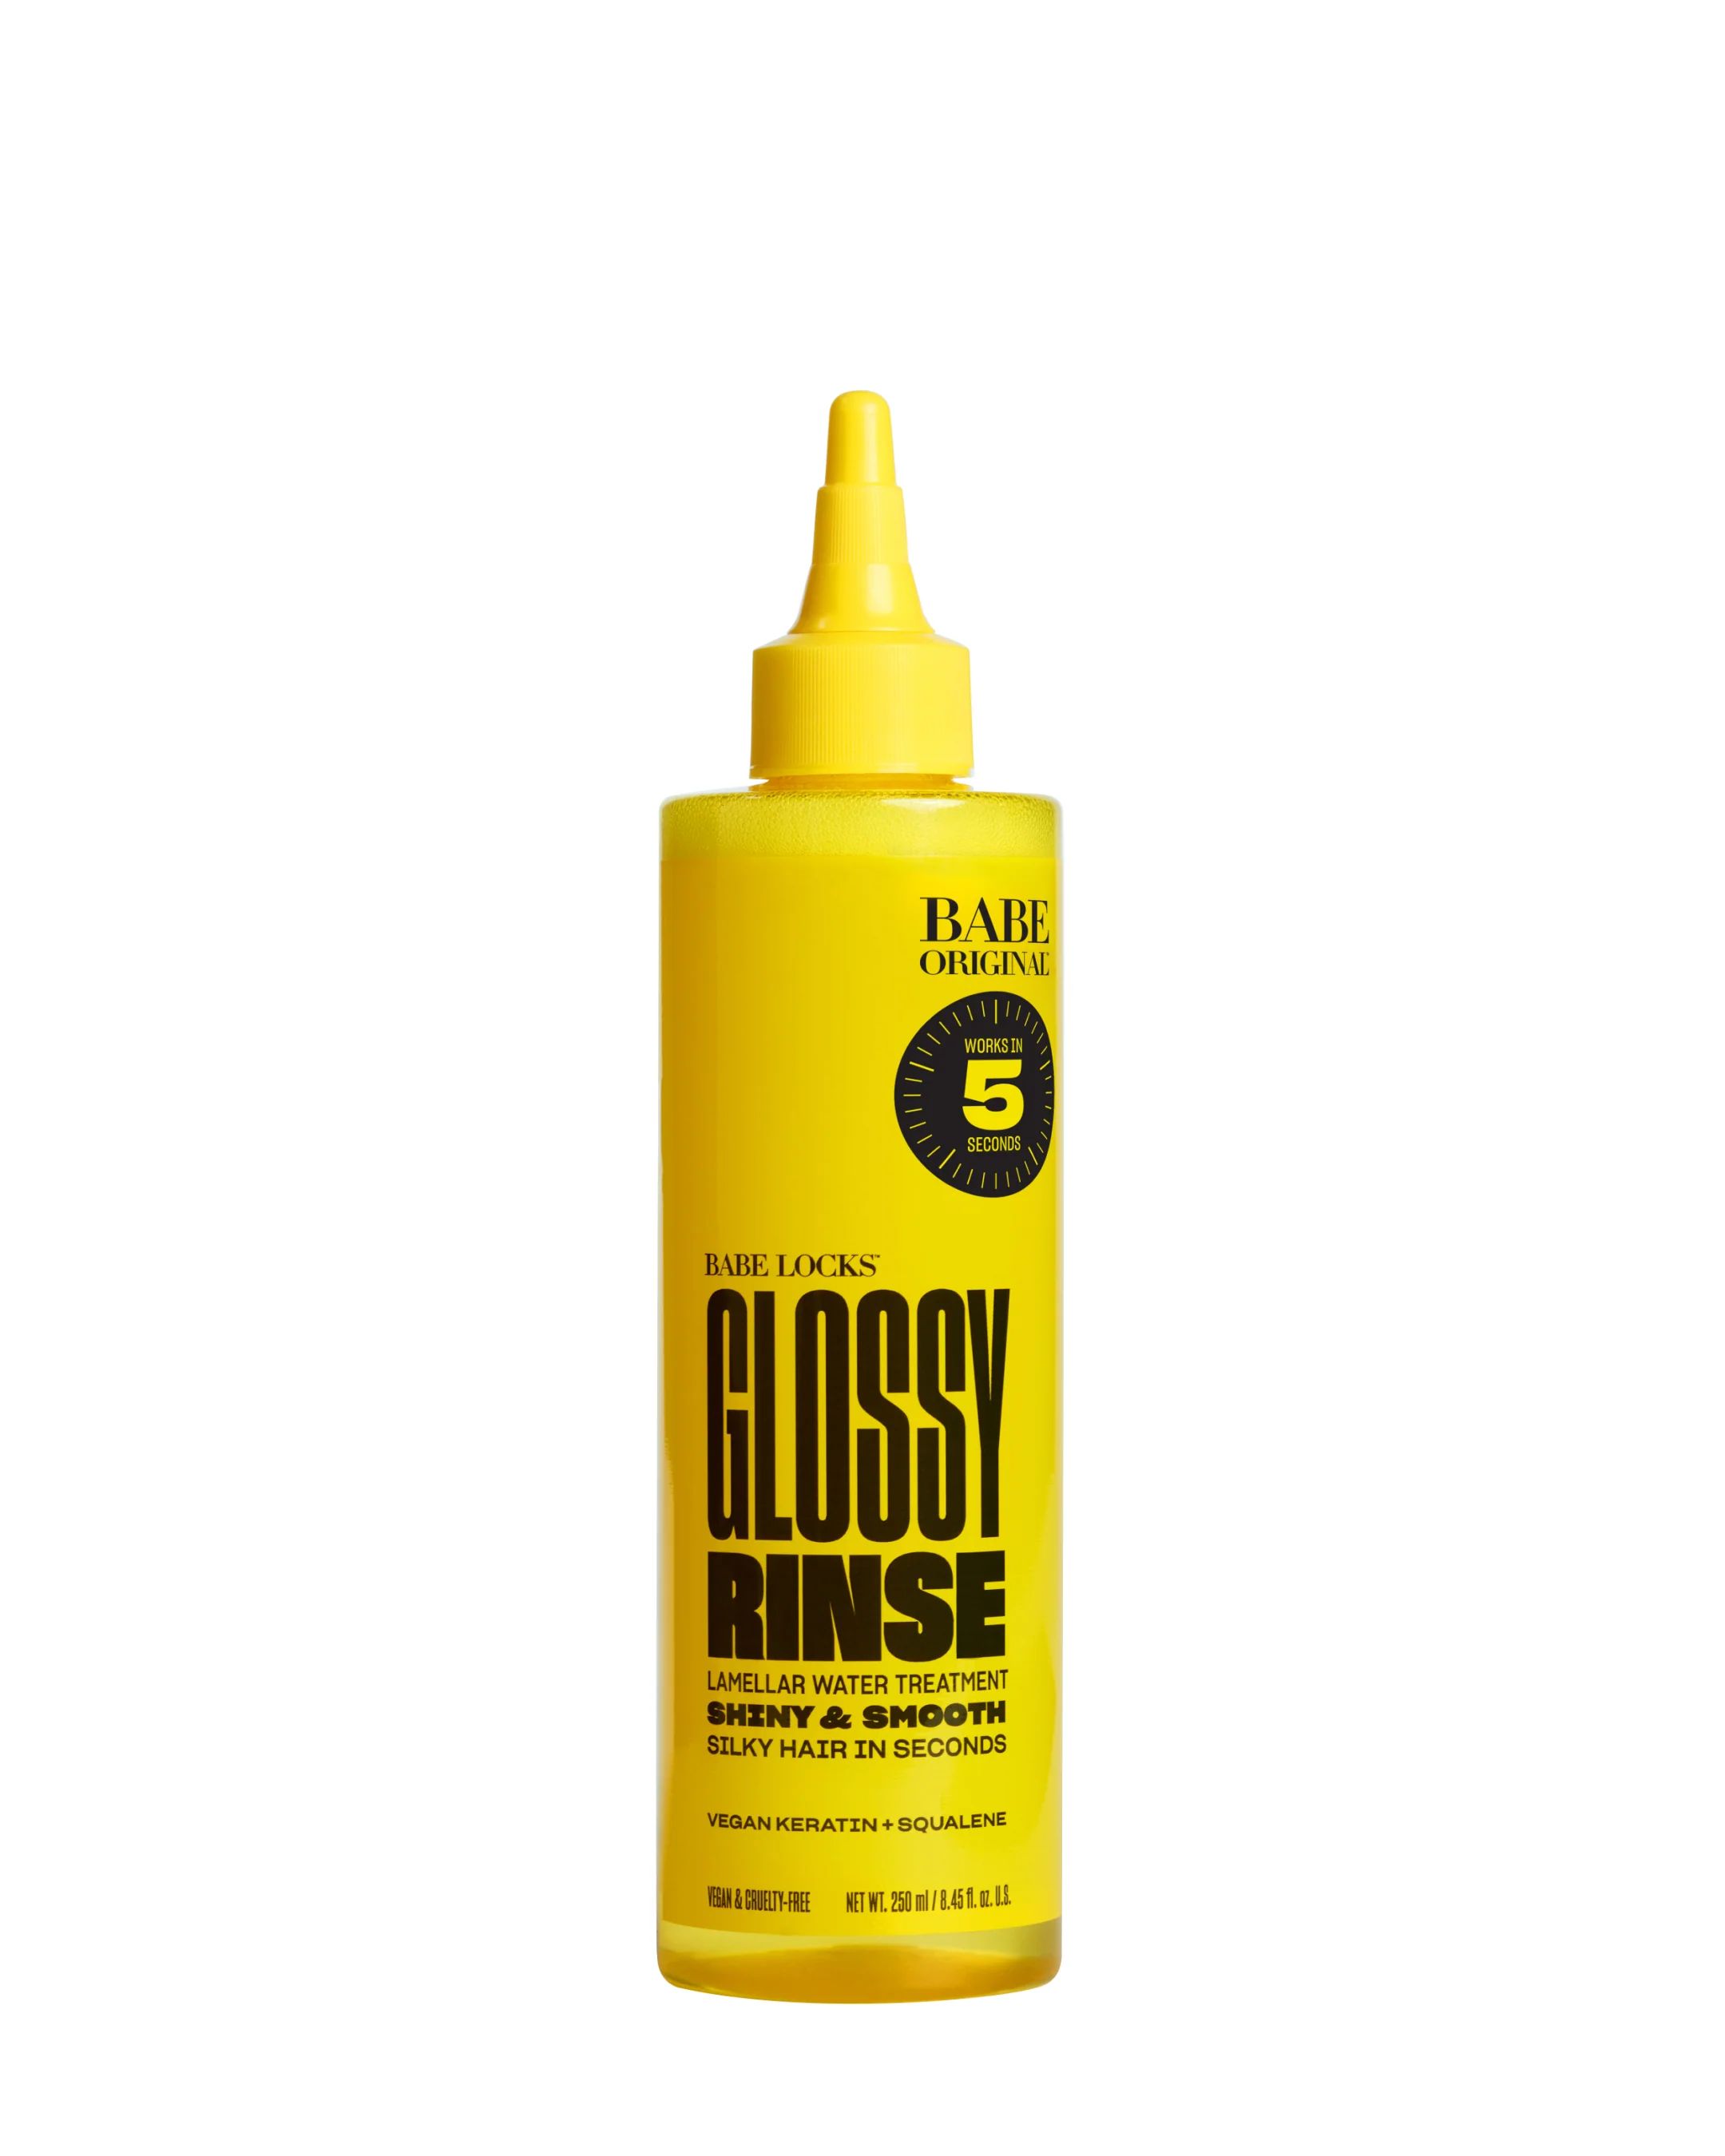 Glossy Rinse Hair Treatment | Babe Original